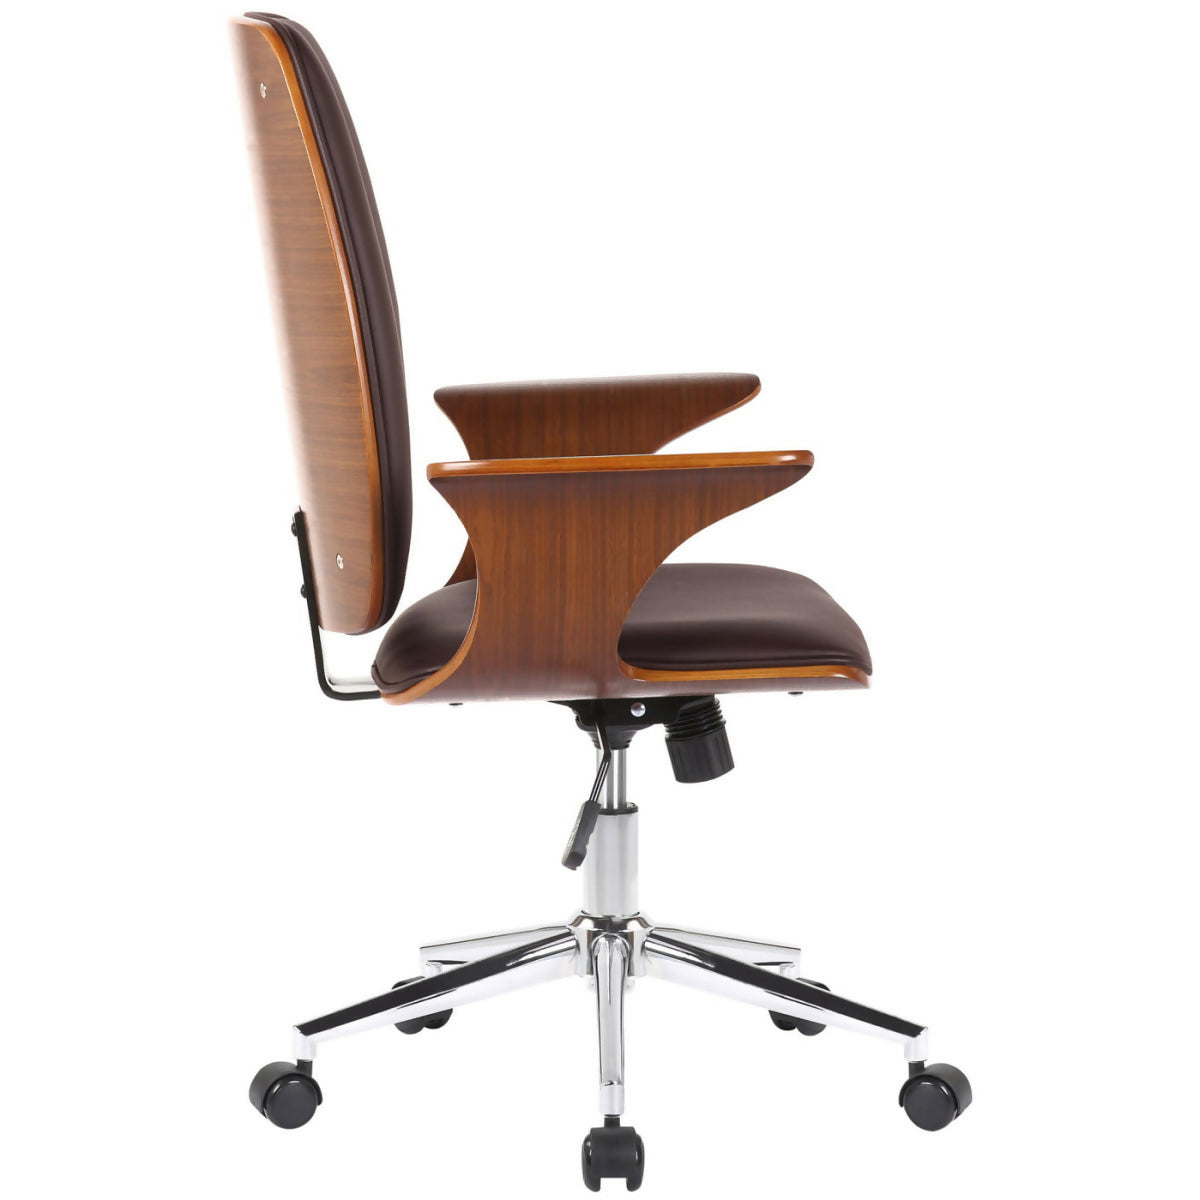 Burbank office chair - Walnut - Brown